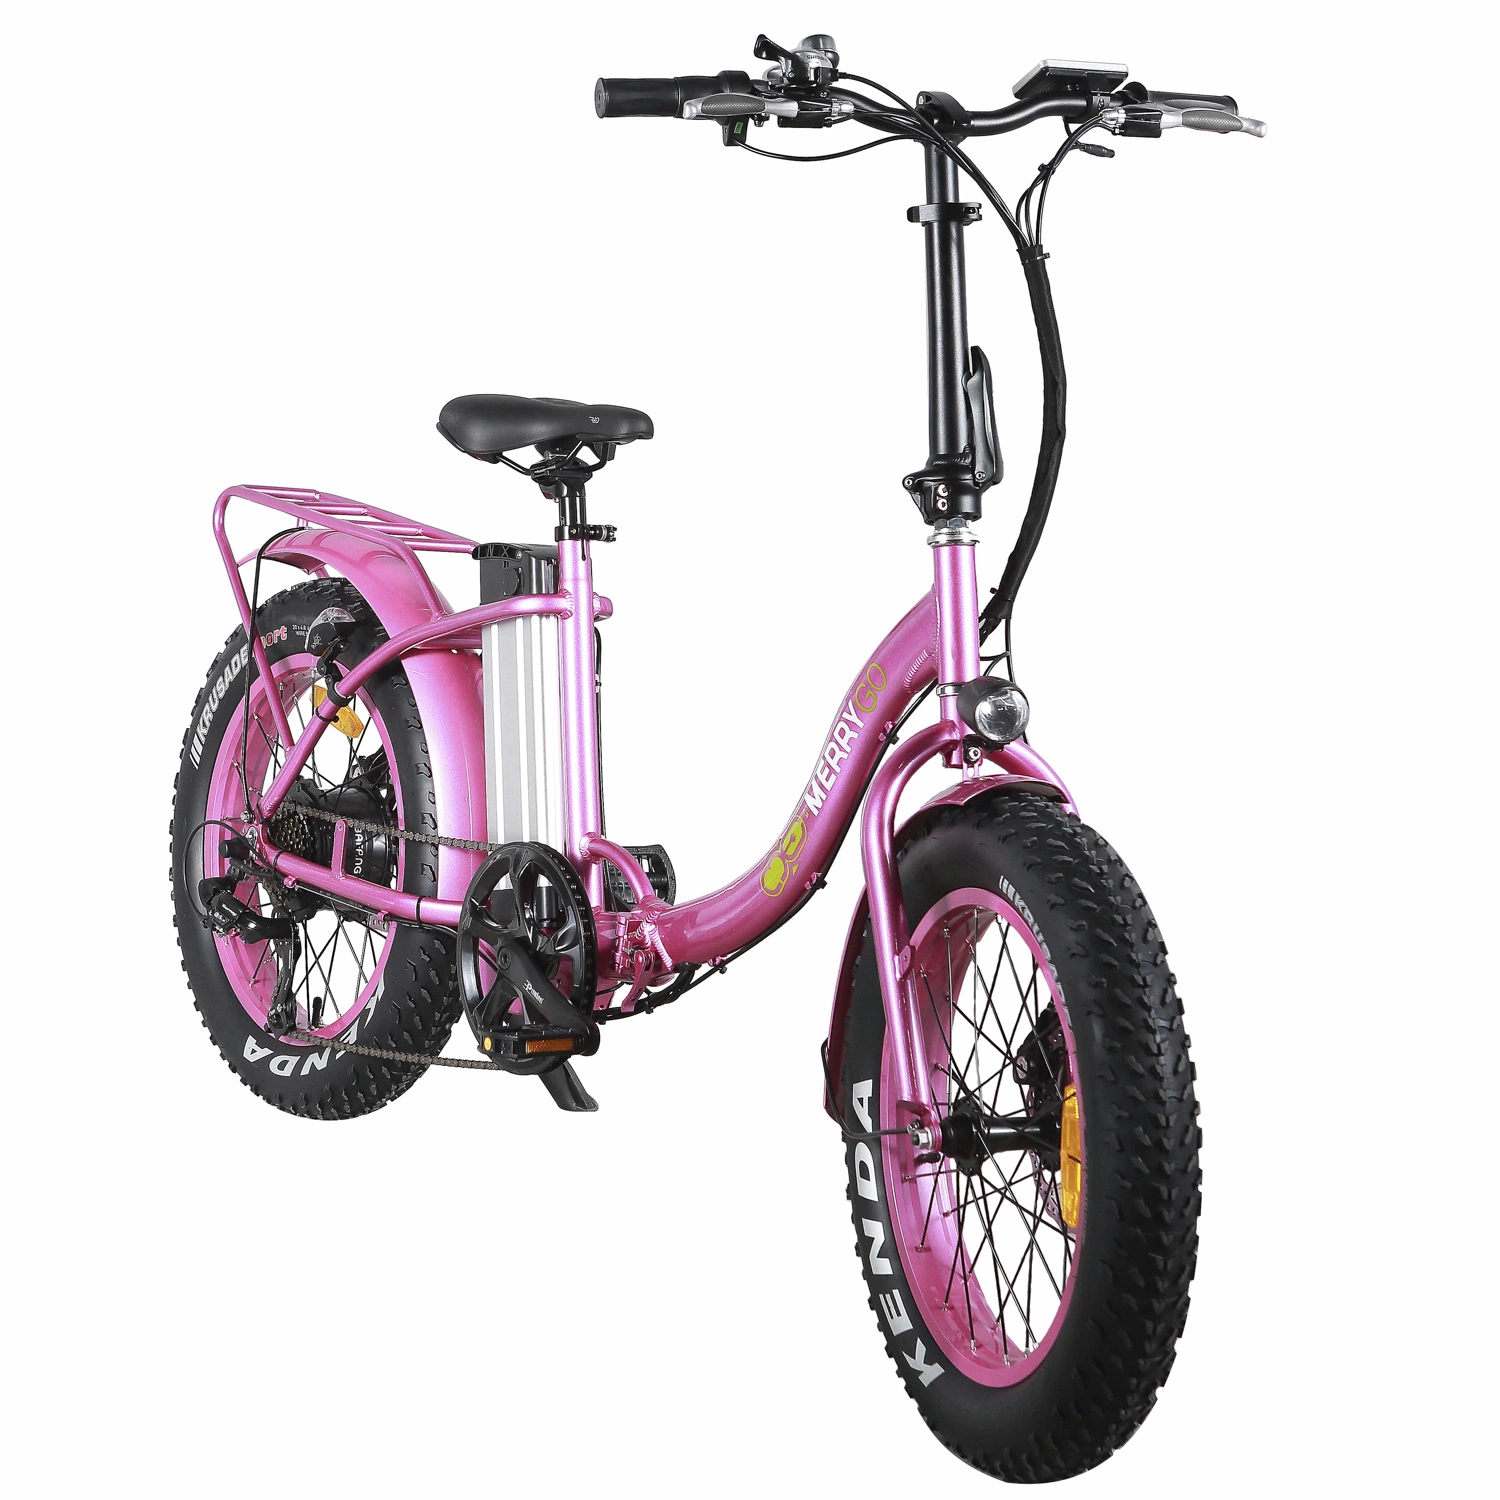 250W Faltbares elektrisches Fahrrad 20 Zoll eBike CE-Zertifizierung billig Falten Elektro Hot Pocket Bike